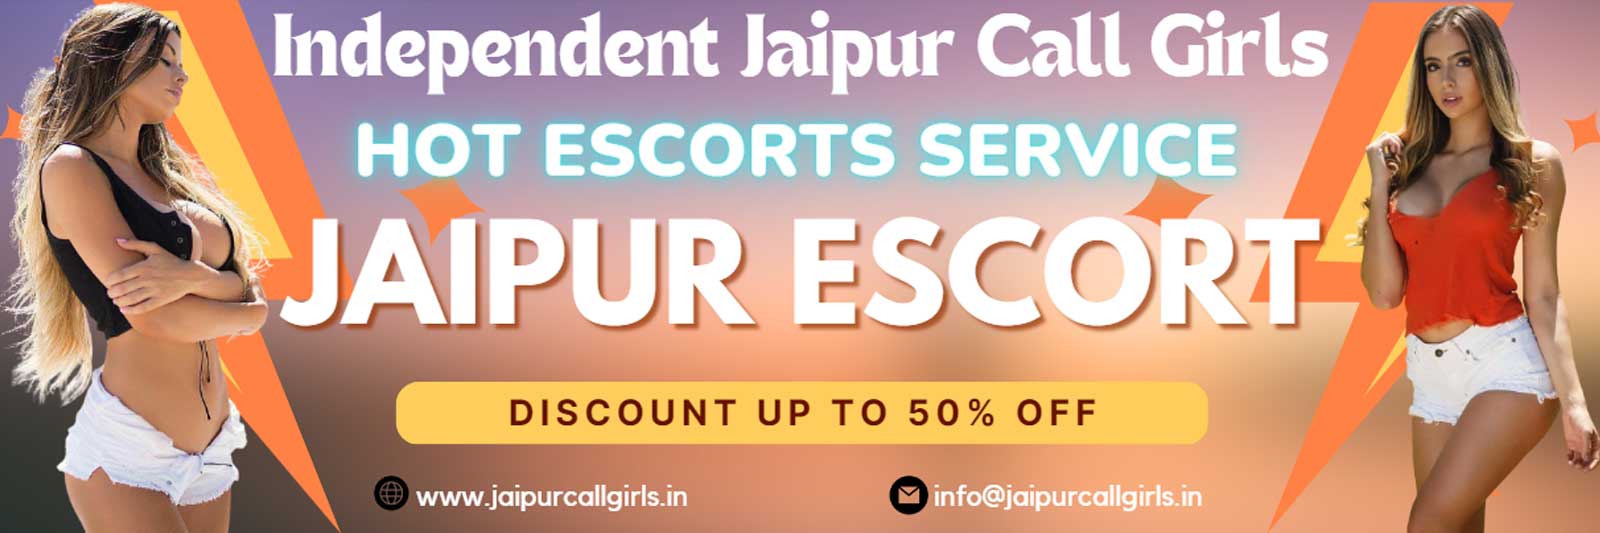 Call Girls Services Jaipur